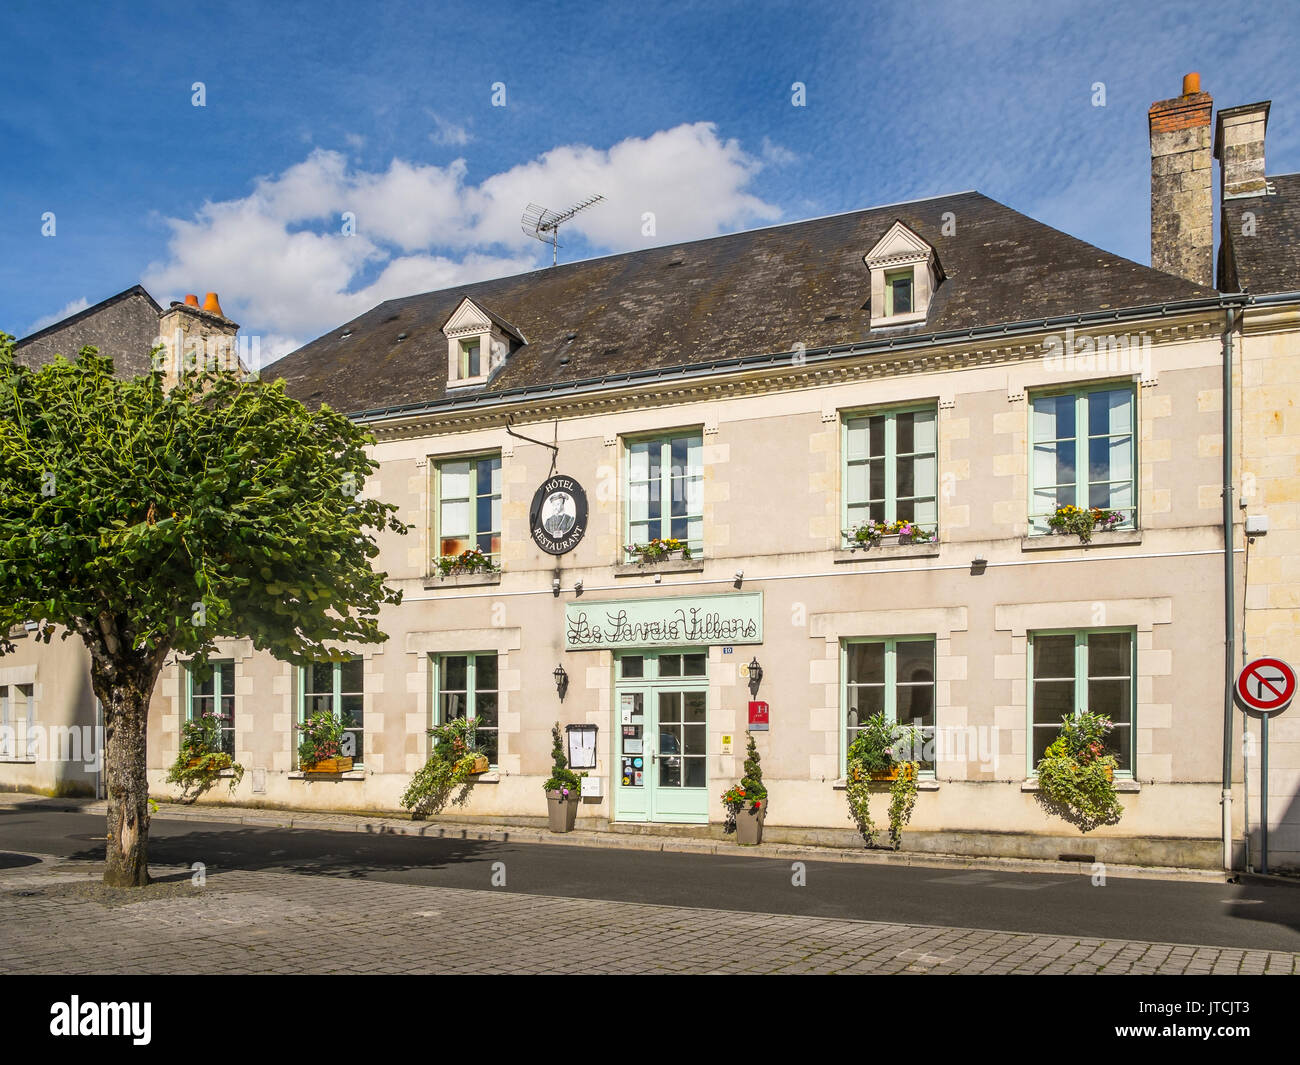 'Le Savois Villars' hotel restaurant, Le Grande Pressigny, France. Stock Photo